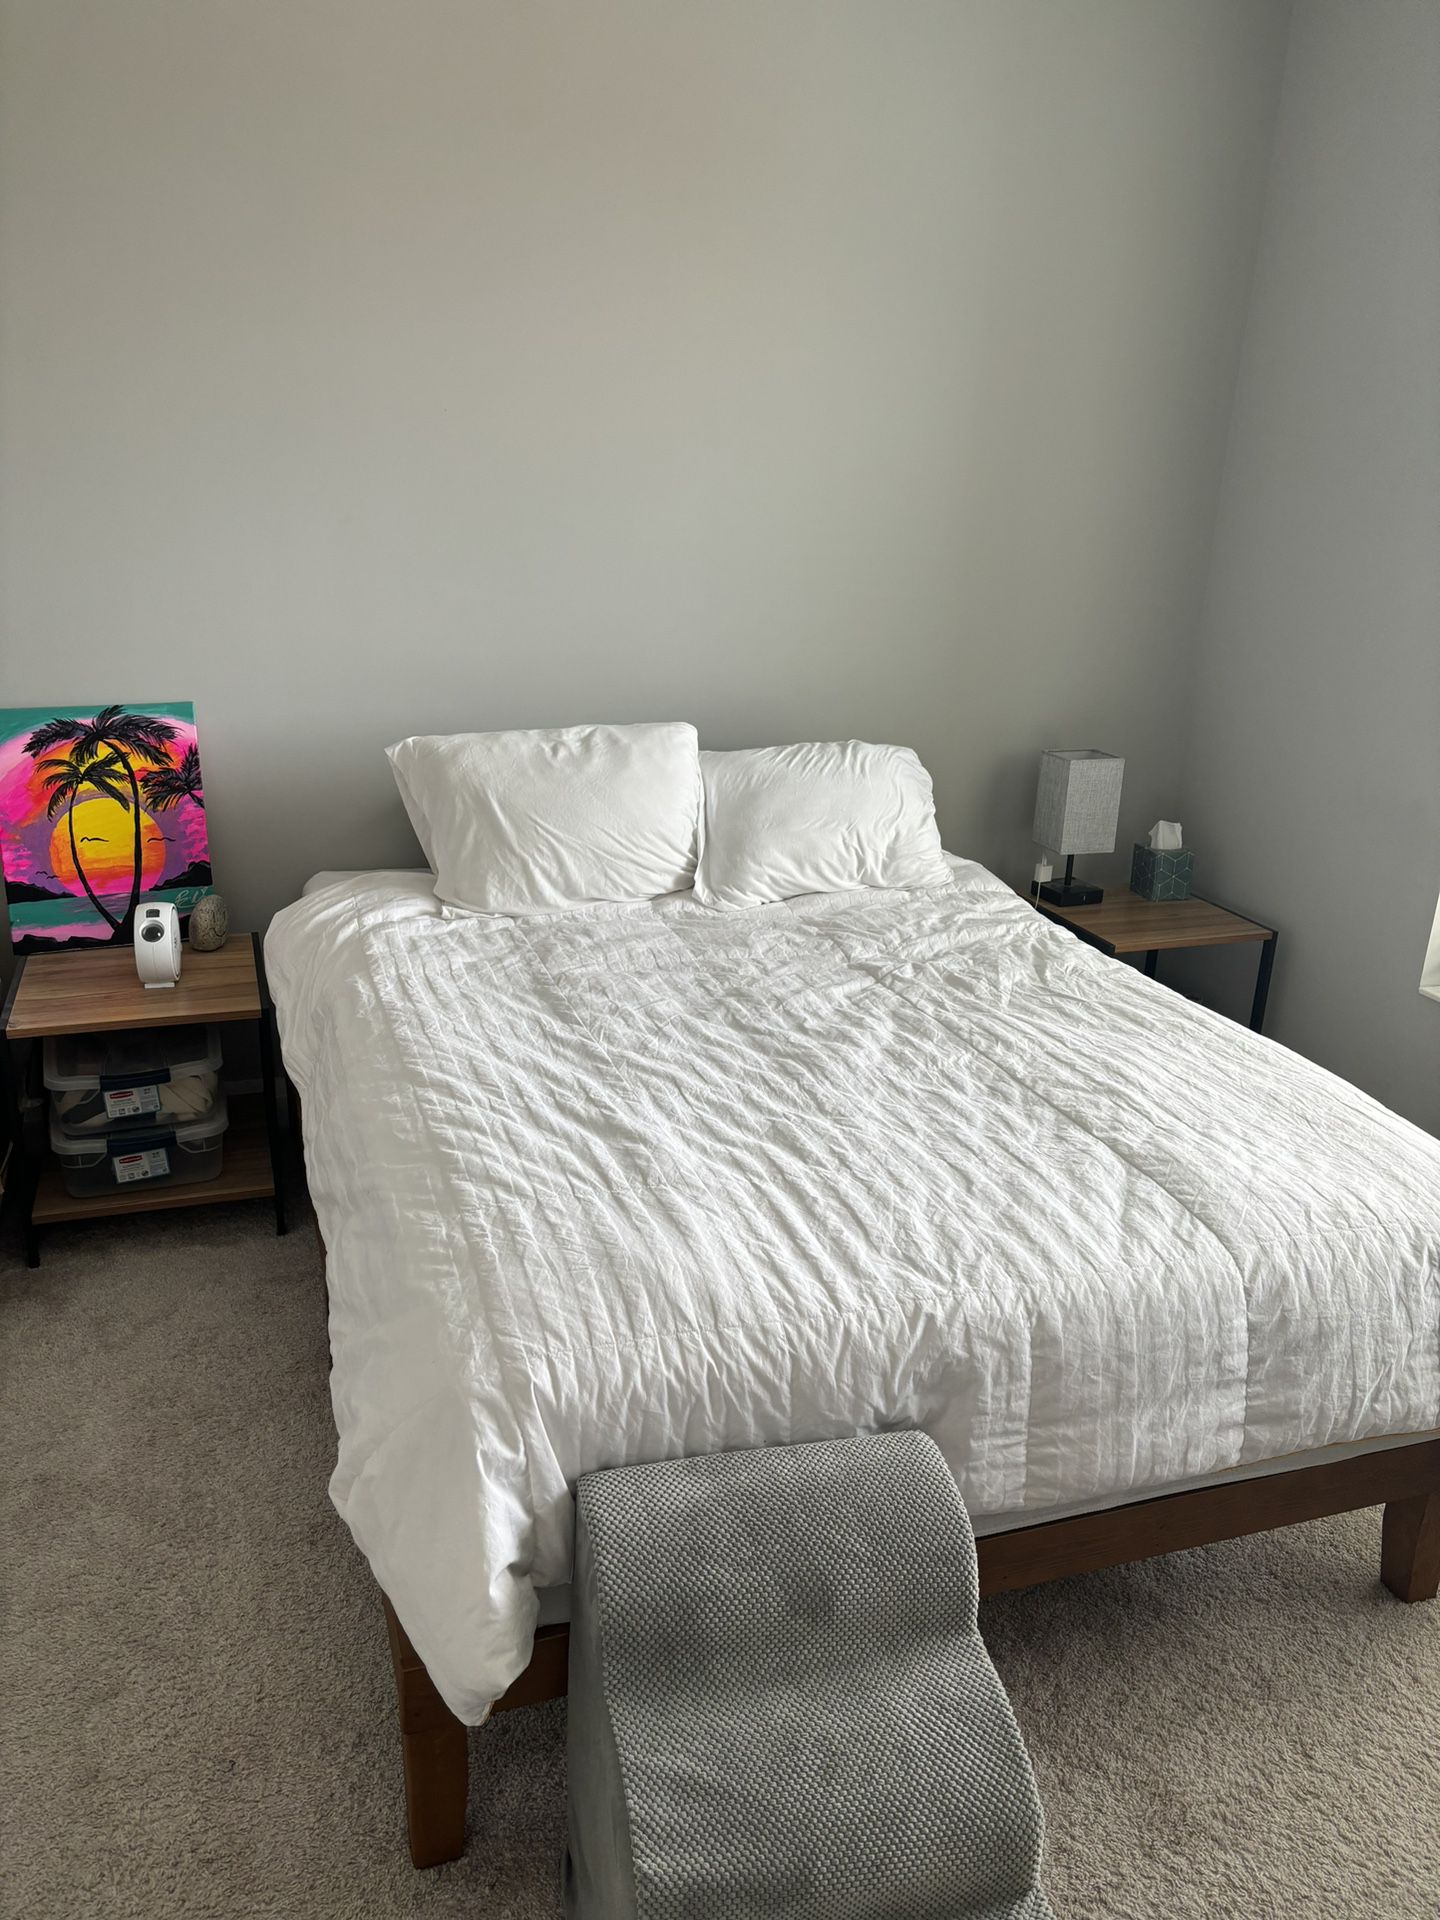 Queen Bed + Wooden Bed Frame